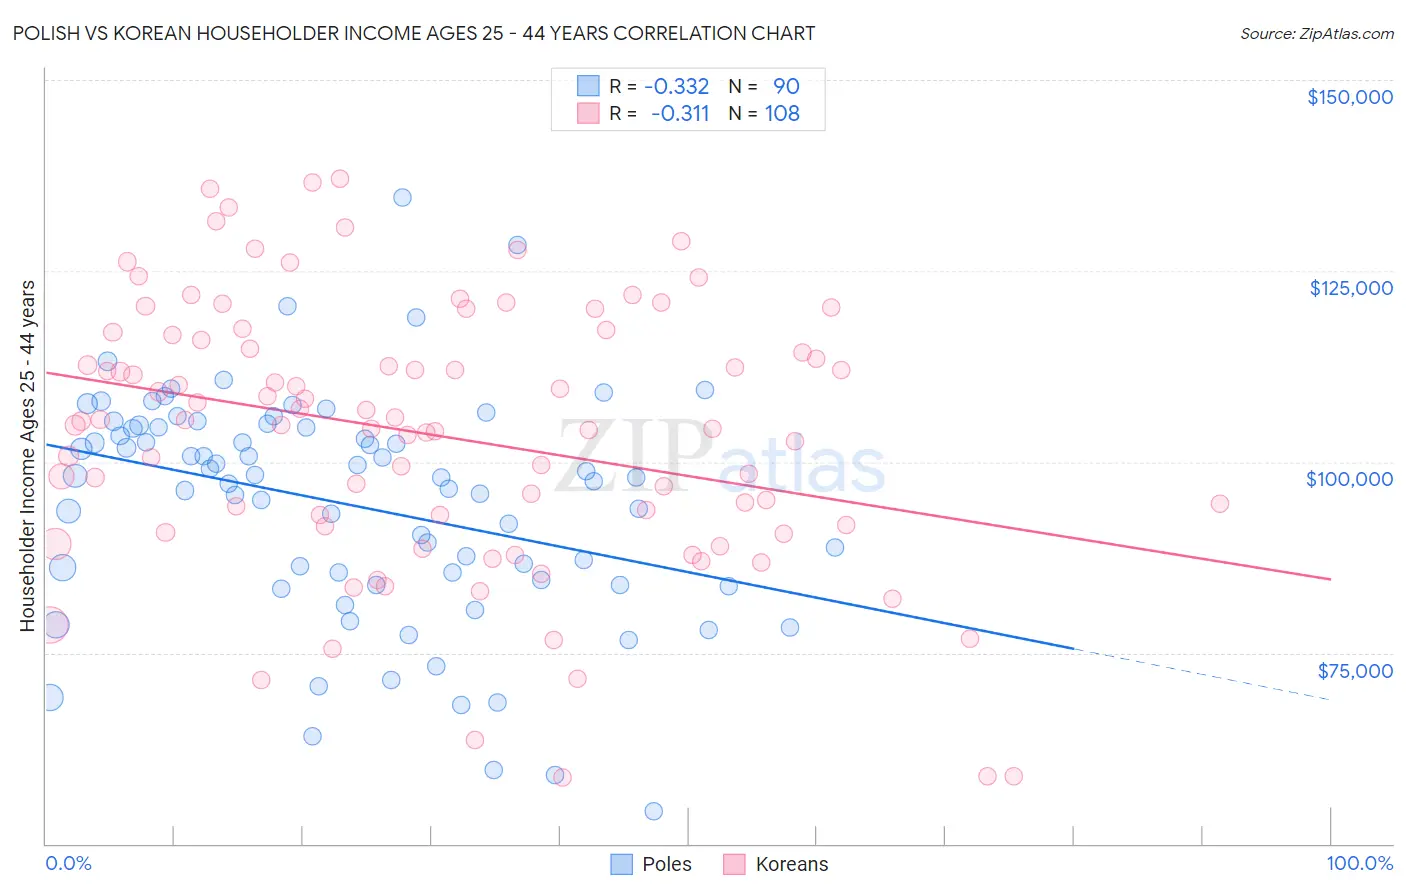 Polish vs Korean Householder Income Ages 25 - 44 years